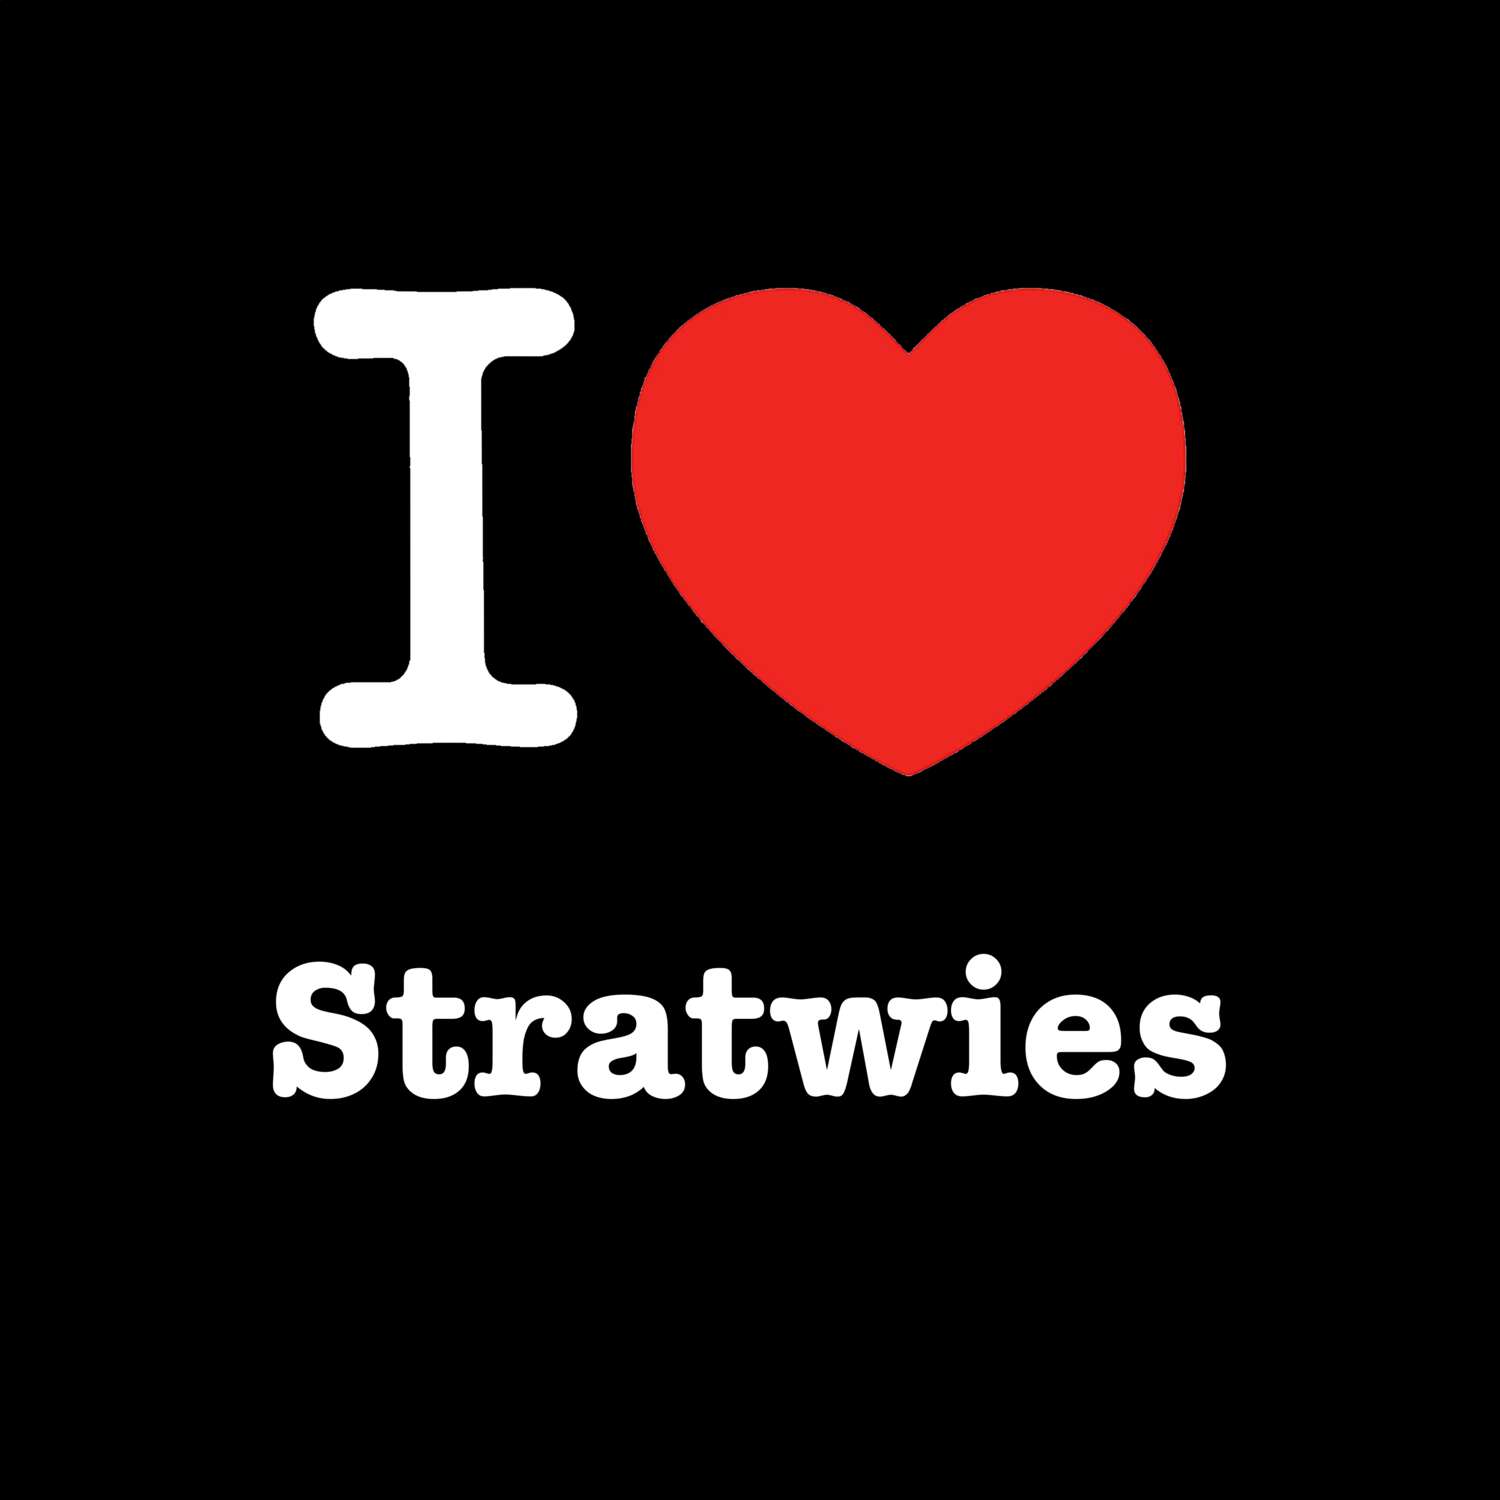 Stratwies T-Shirt »I love«